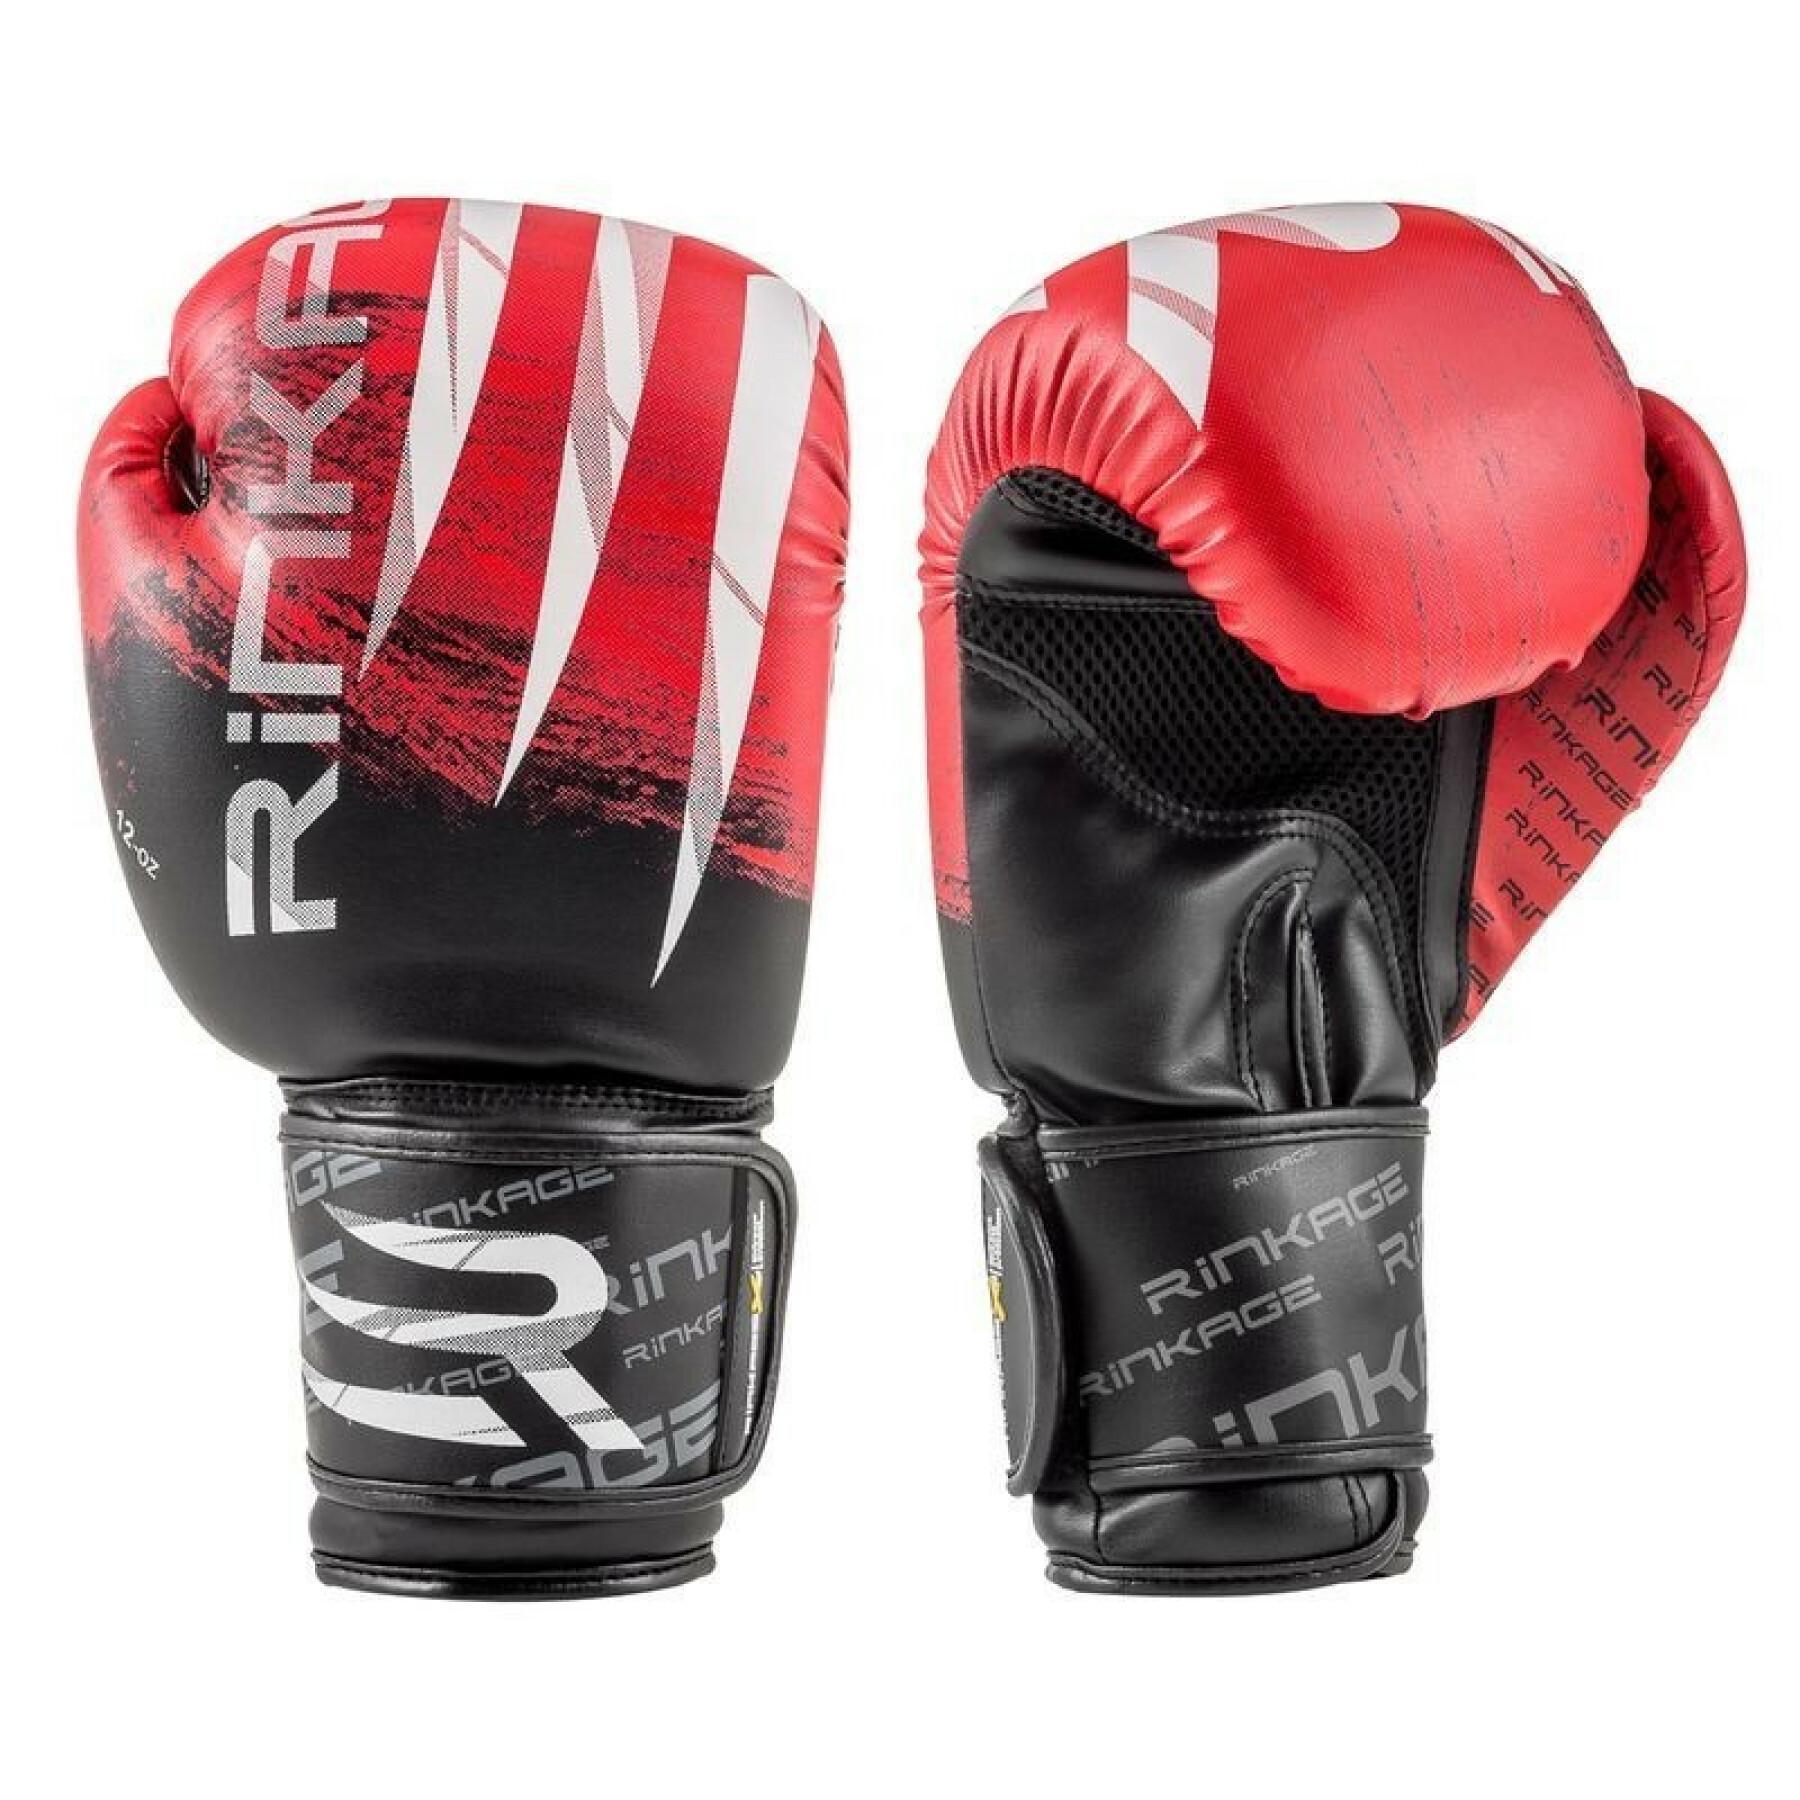 Boxing gloves Rinkage Blast